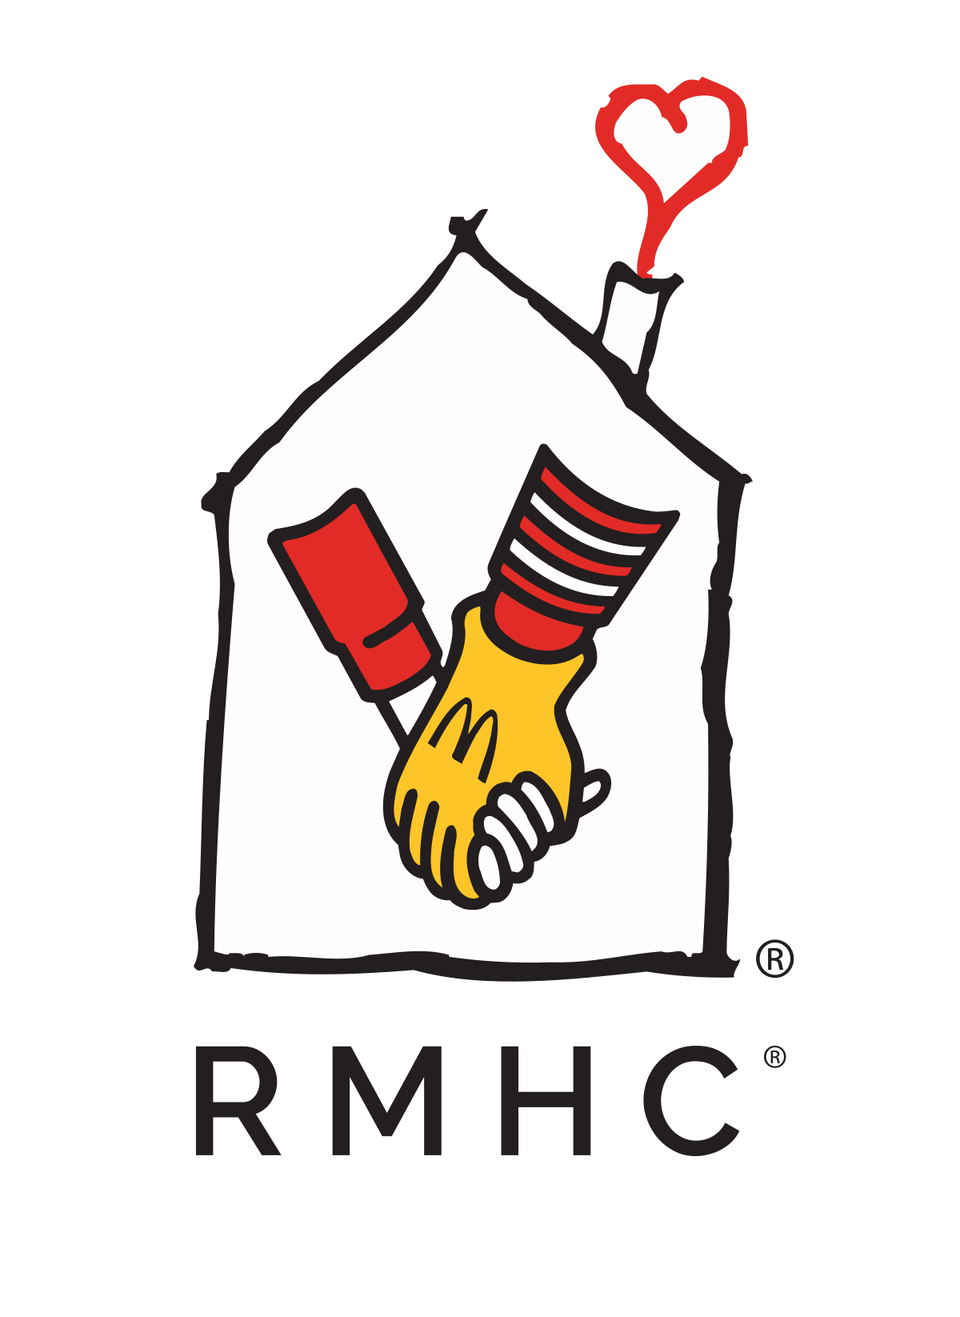 Ronald mcdonald house charities logo